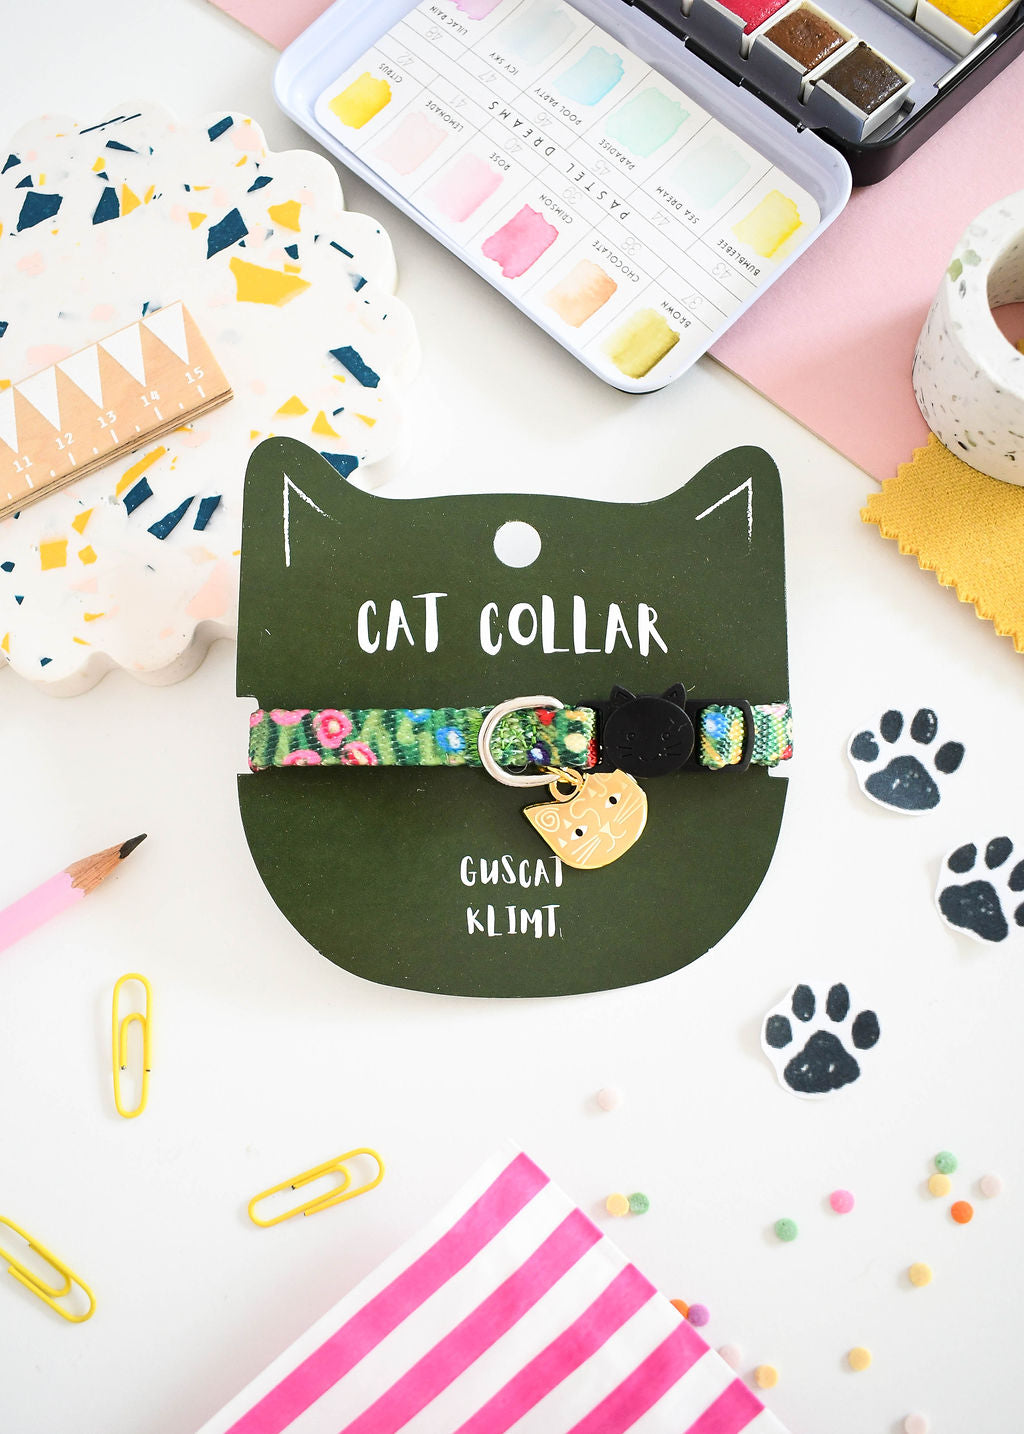 Guscat Klimt Artist Cat Collar